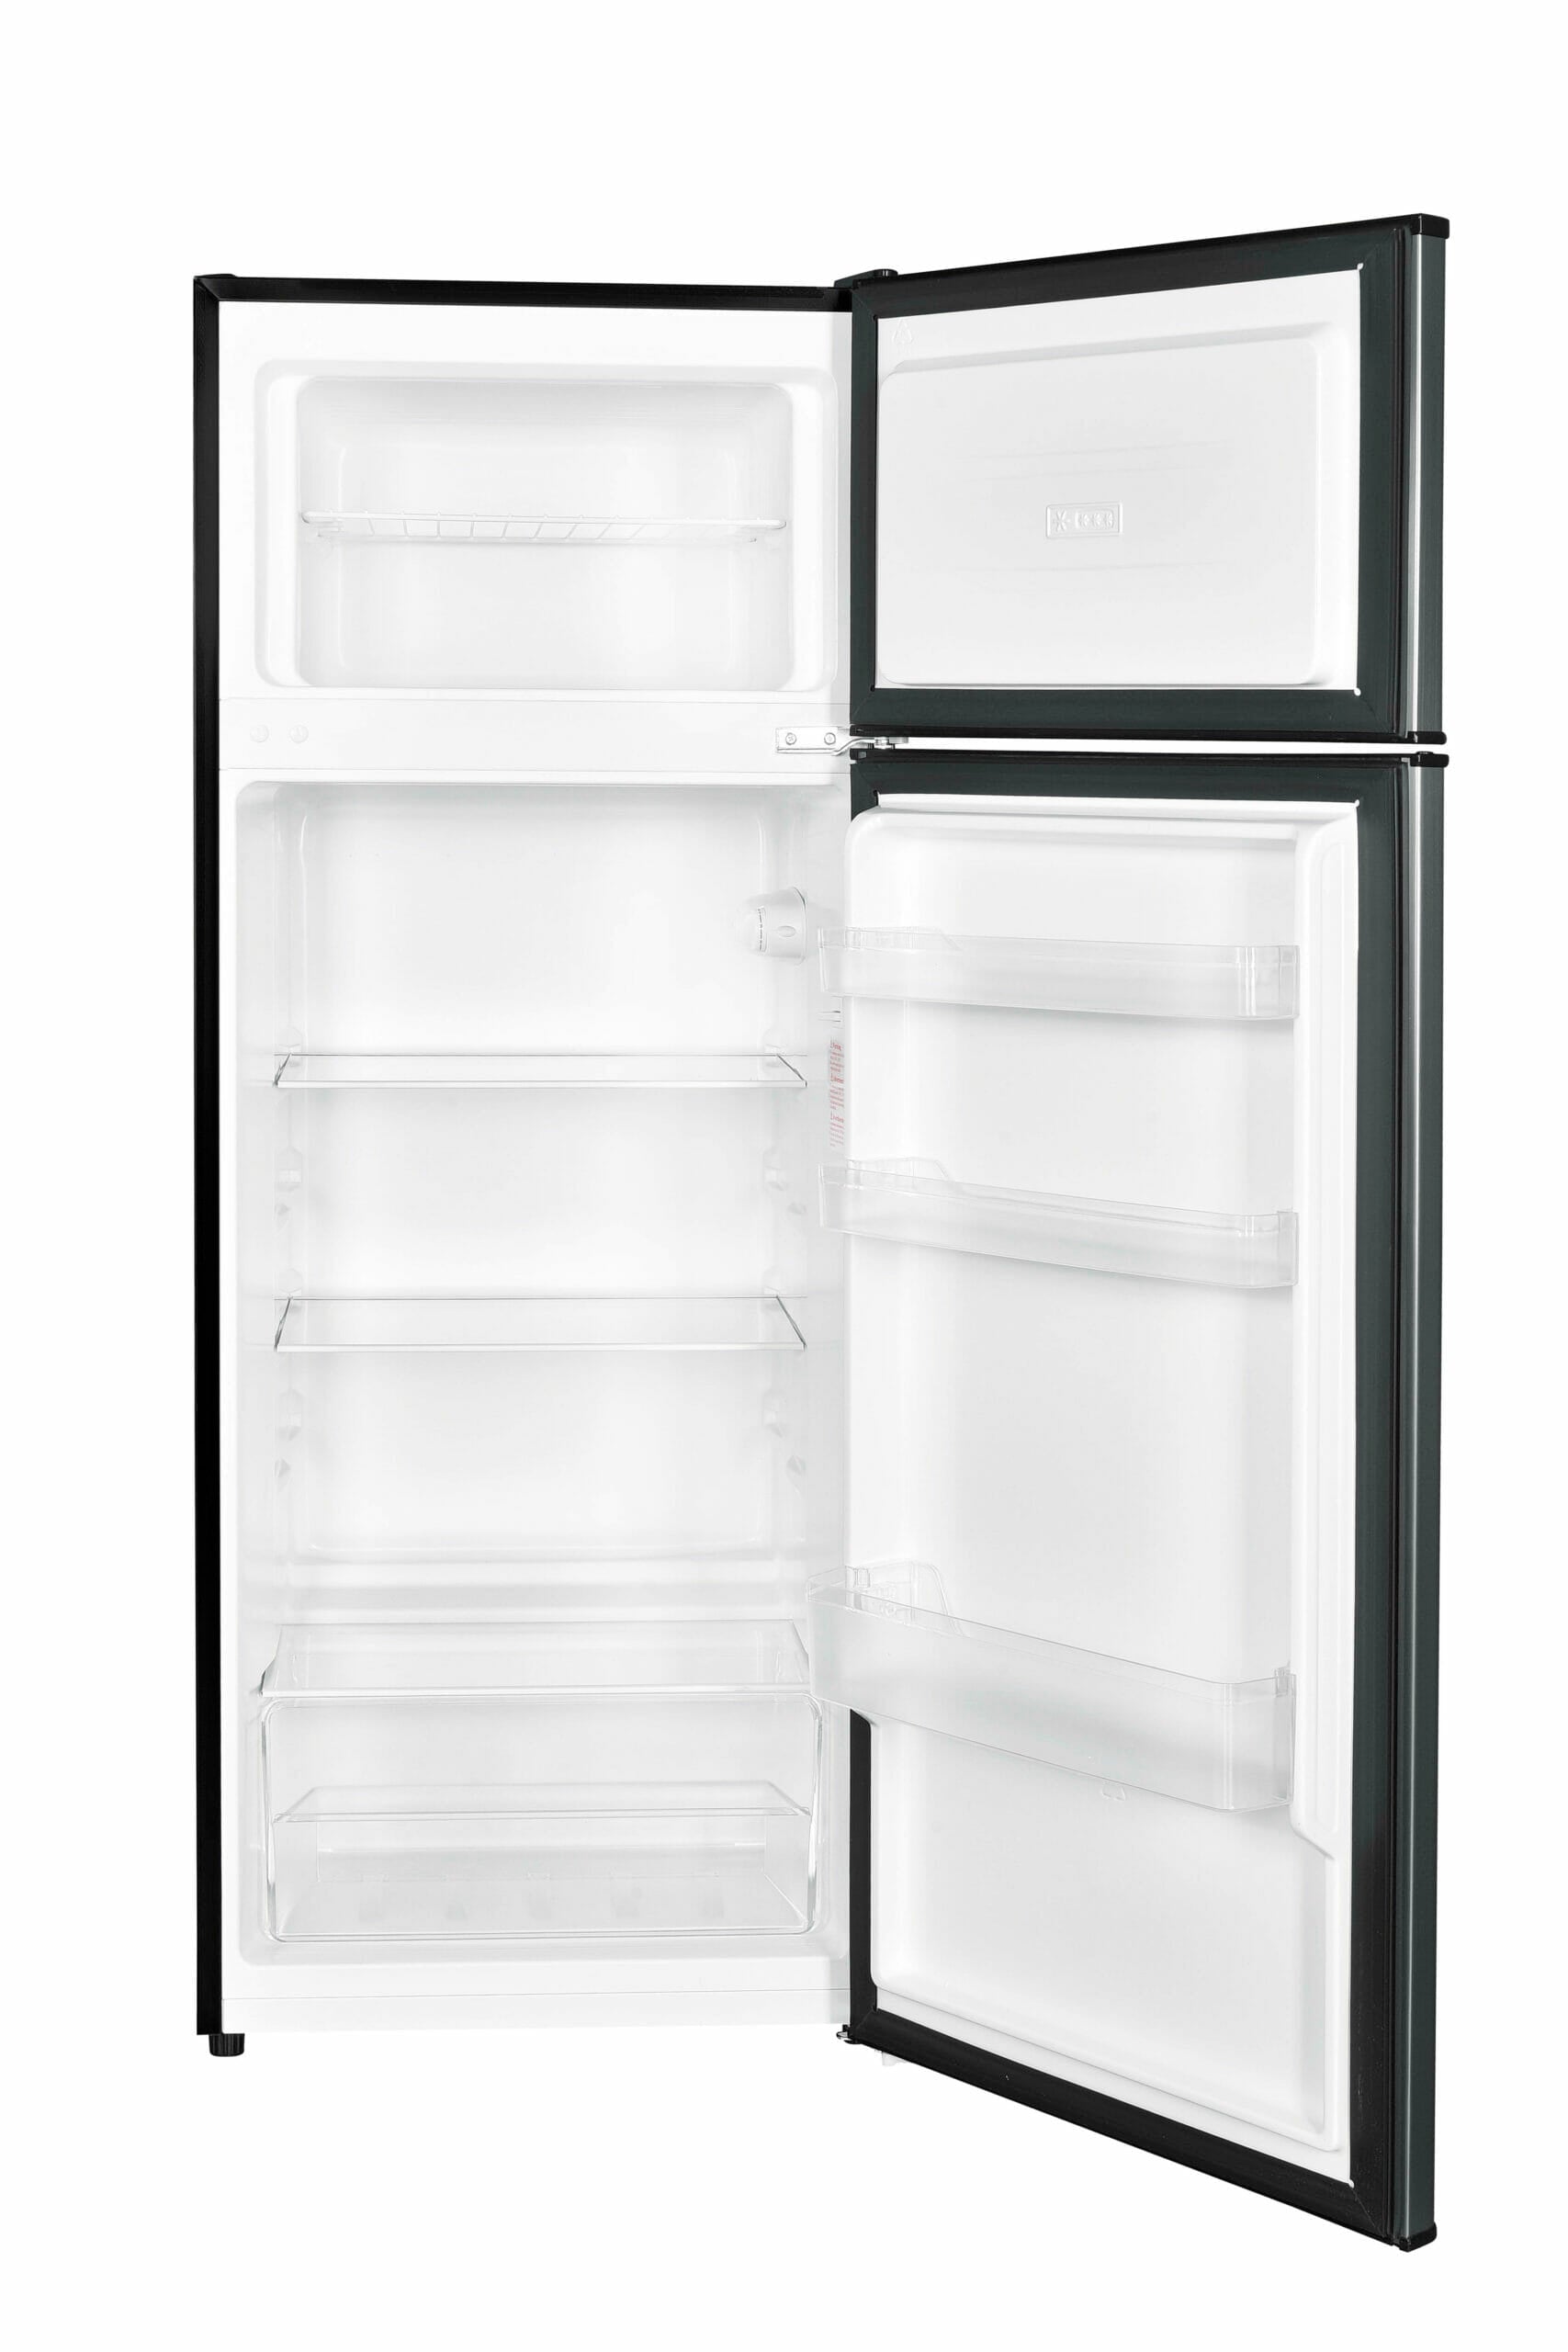 Danby - 7.4 CuFt Refrigerator, Manual Defrost, Crisper w/ Cover, ESTAR - DPF074B2BSLDB-6